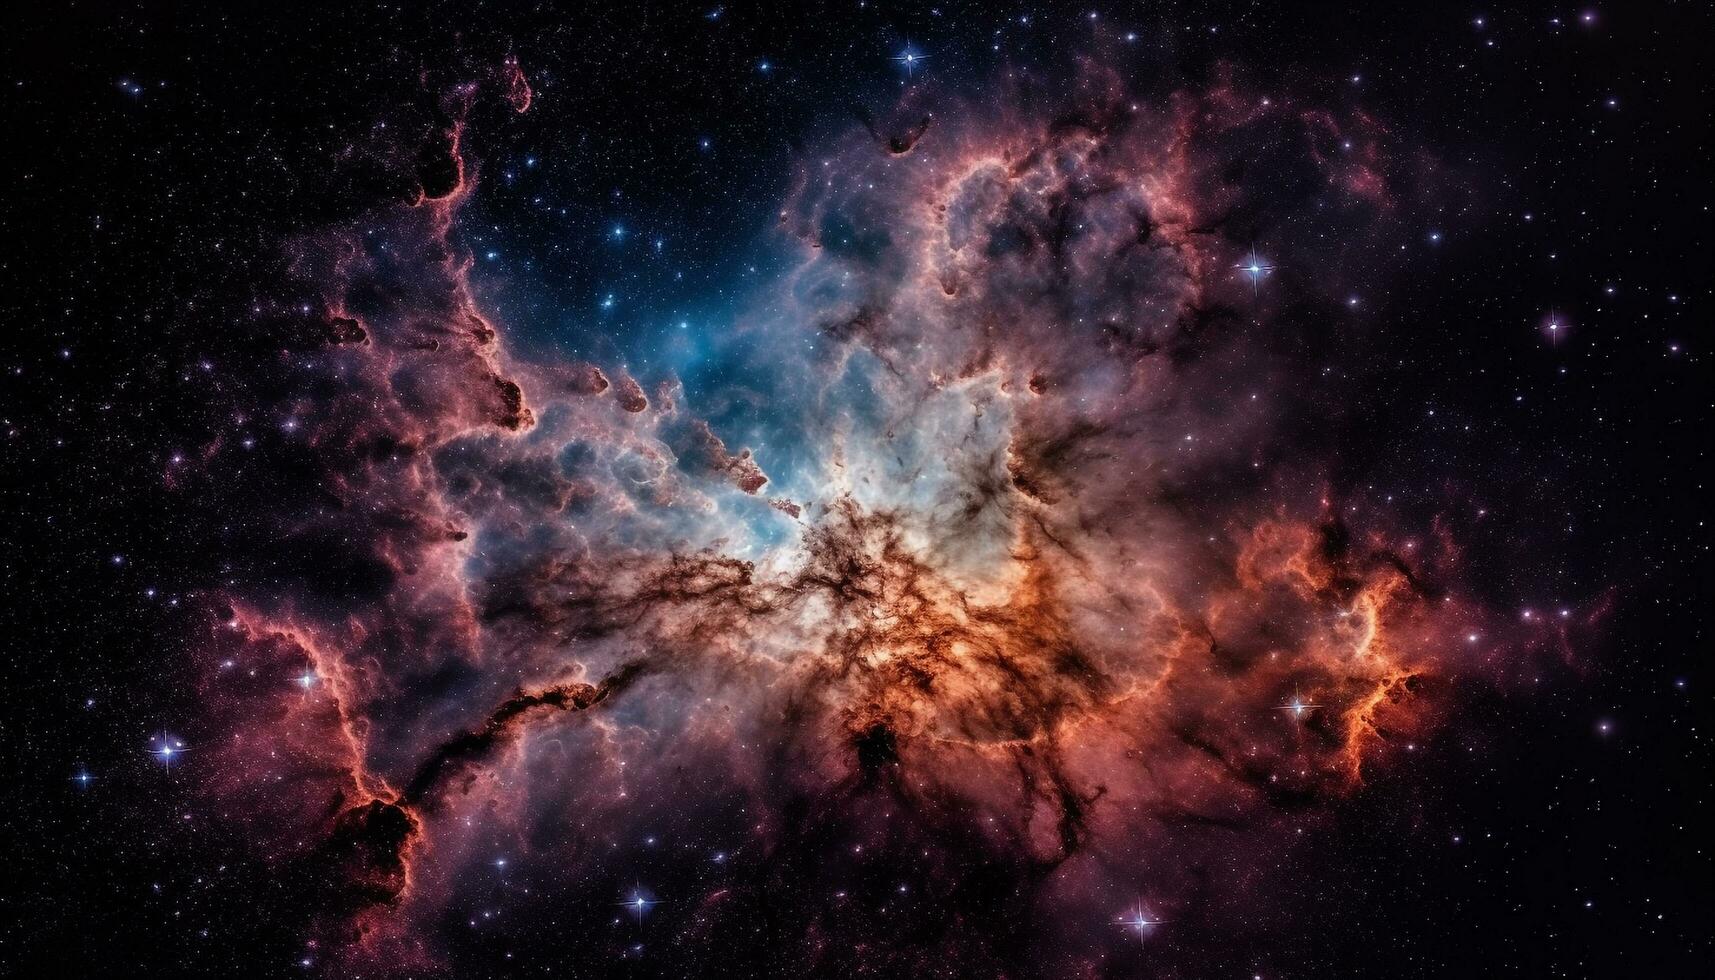 Exploring the deep space, a glowing supernova creation illuminates galaxy generated by AI photo